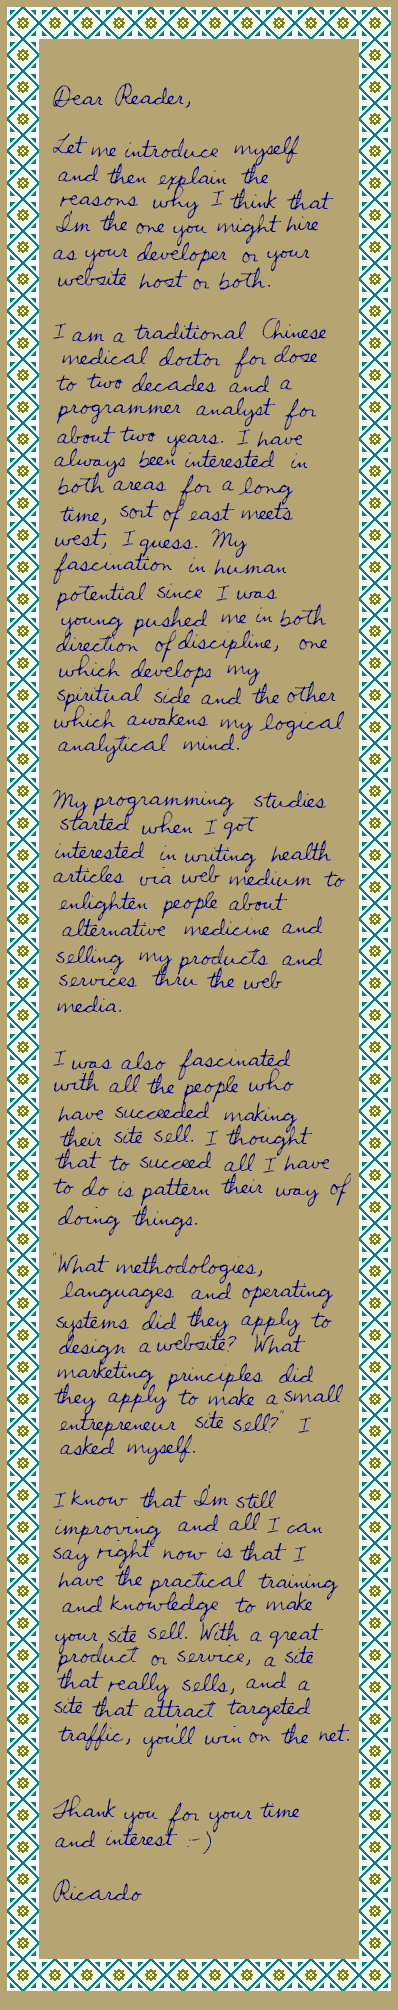 Handwritten letter to my readers, 3/31/2000